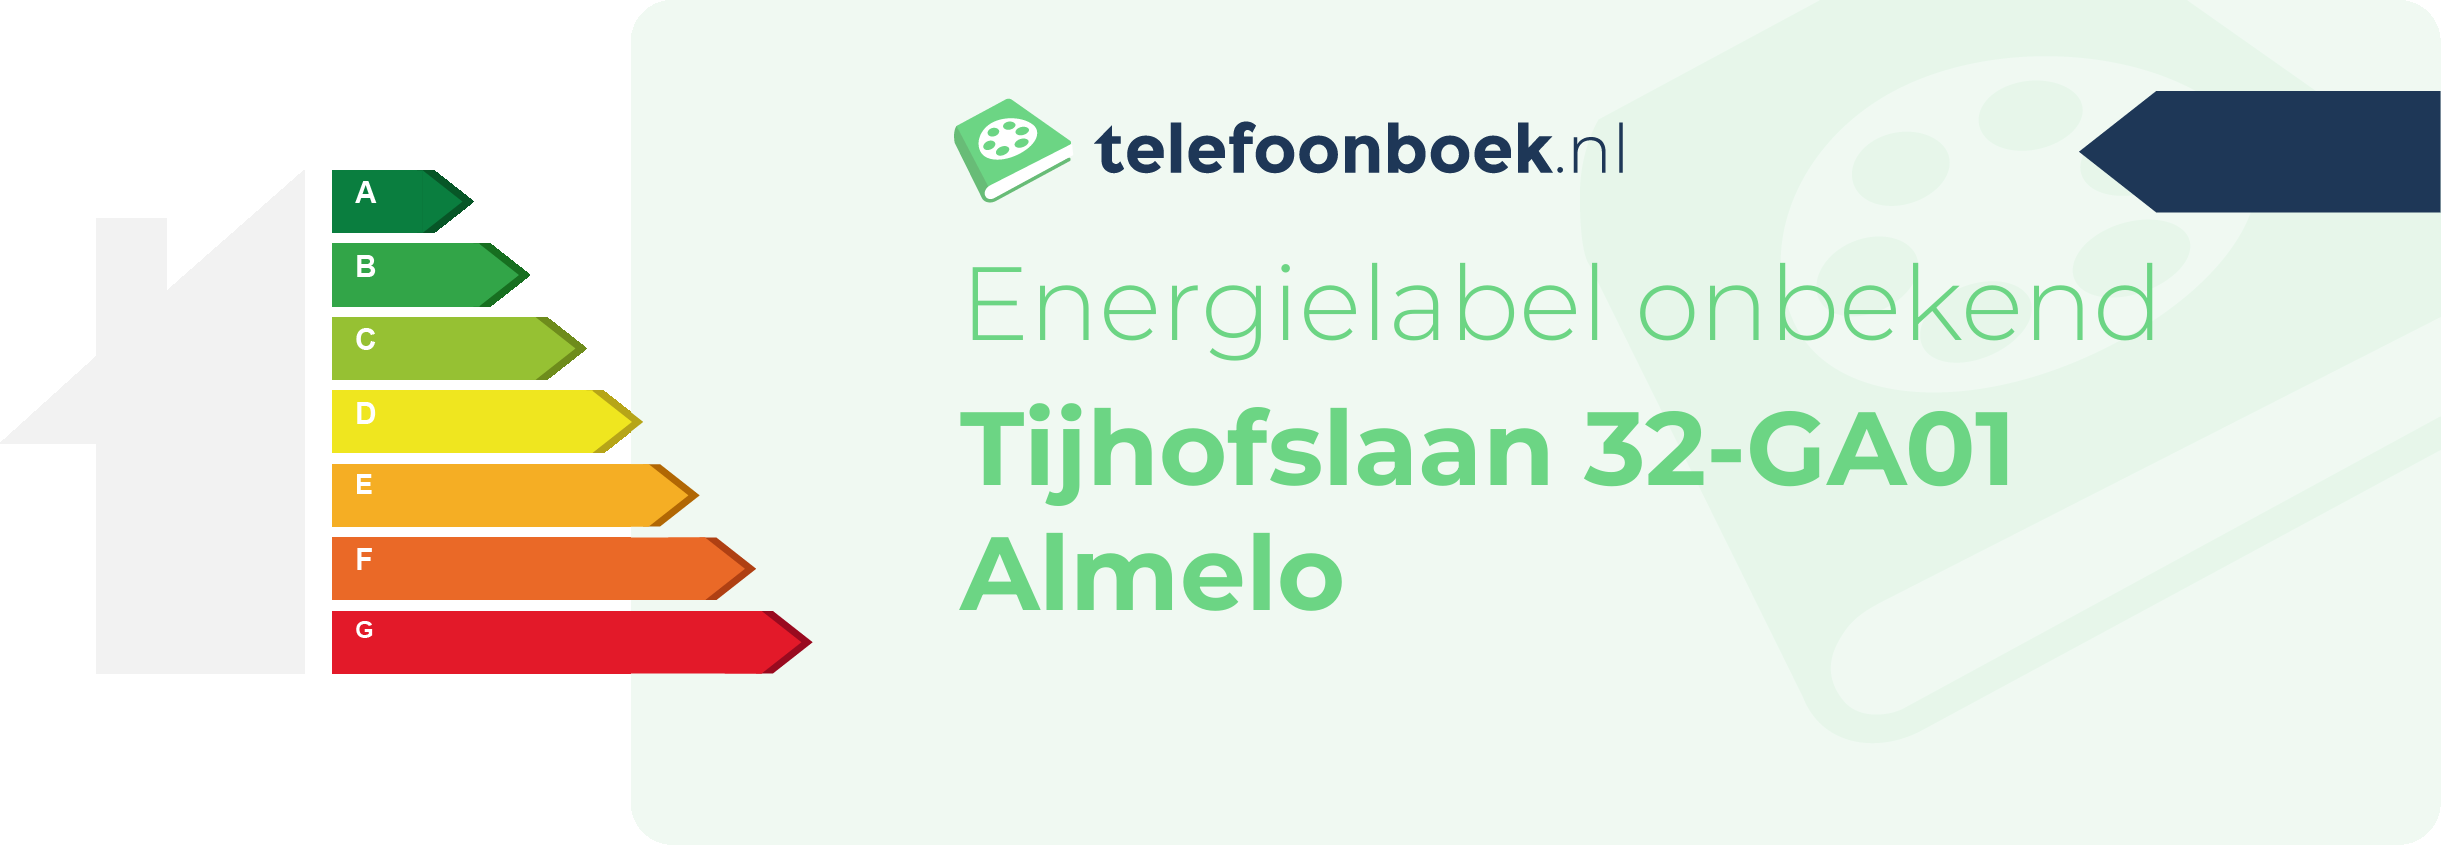 Energielabel Tijhofslaan 32-GA01 Almelo